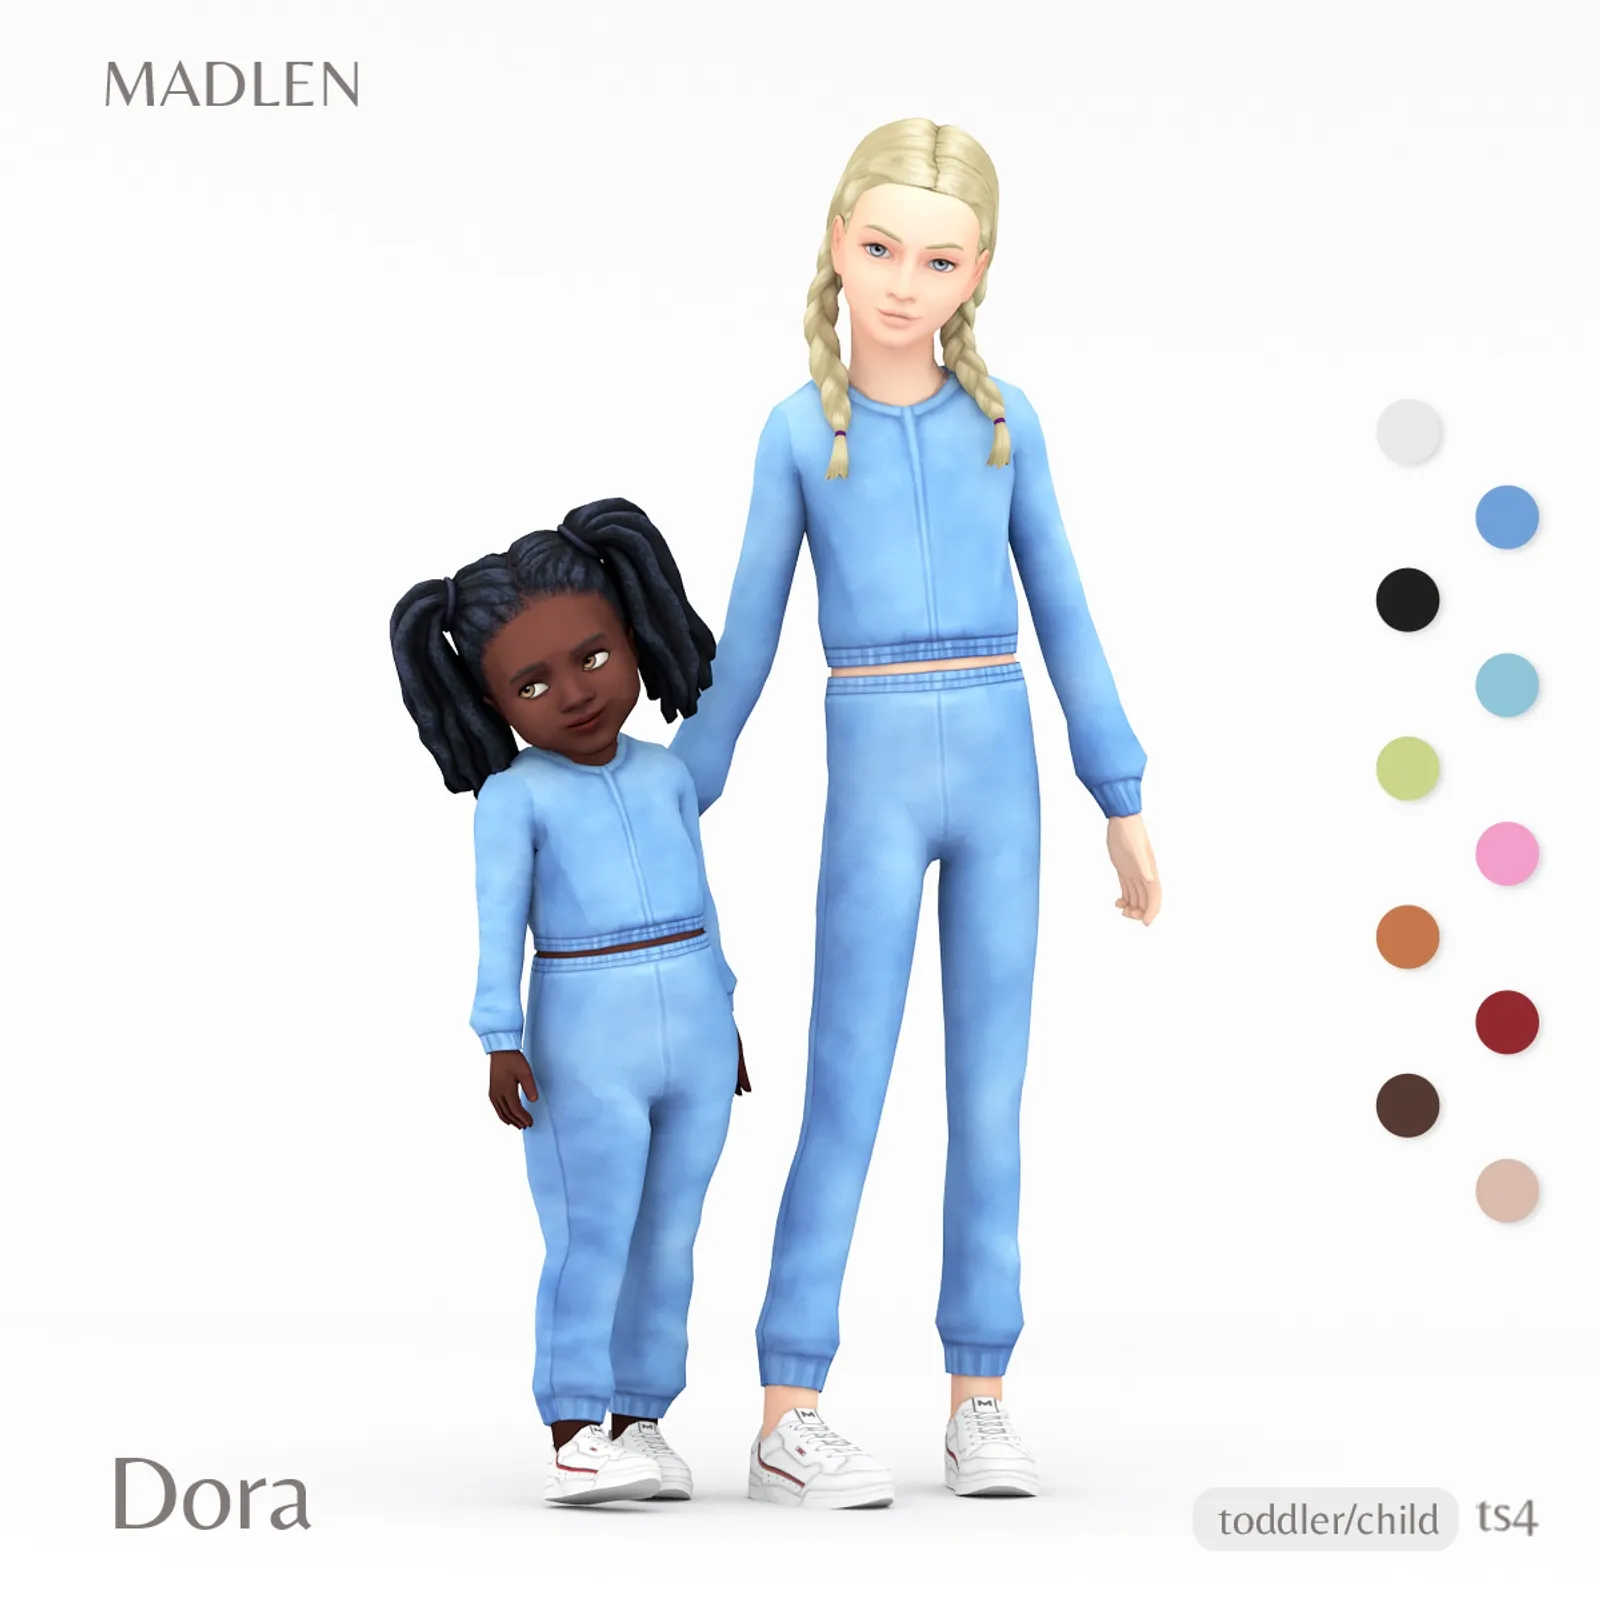 Madlen Dora Outfit